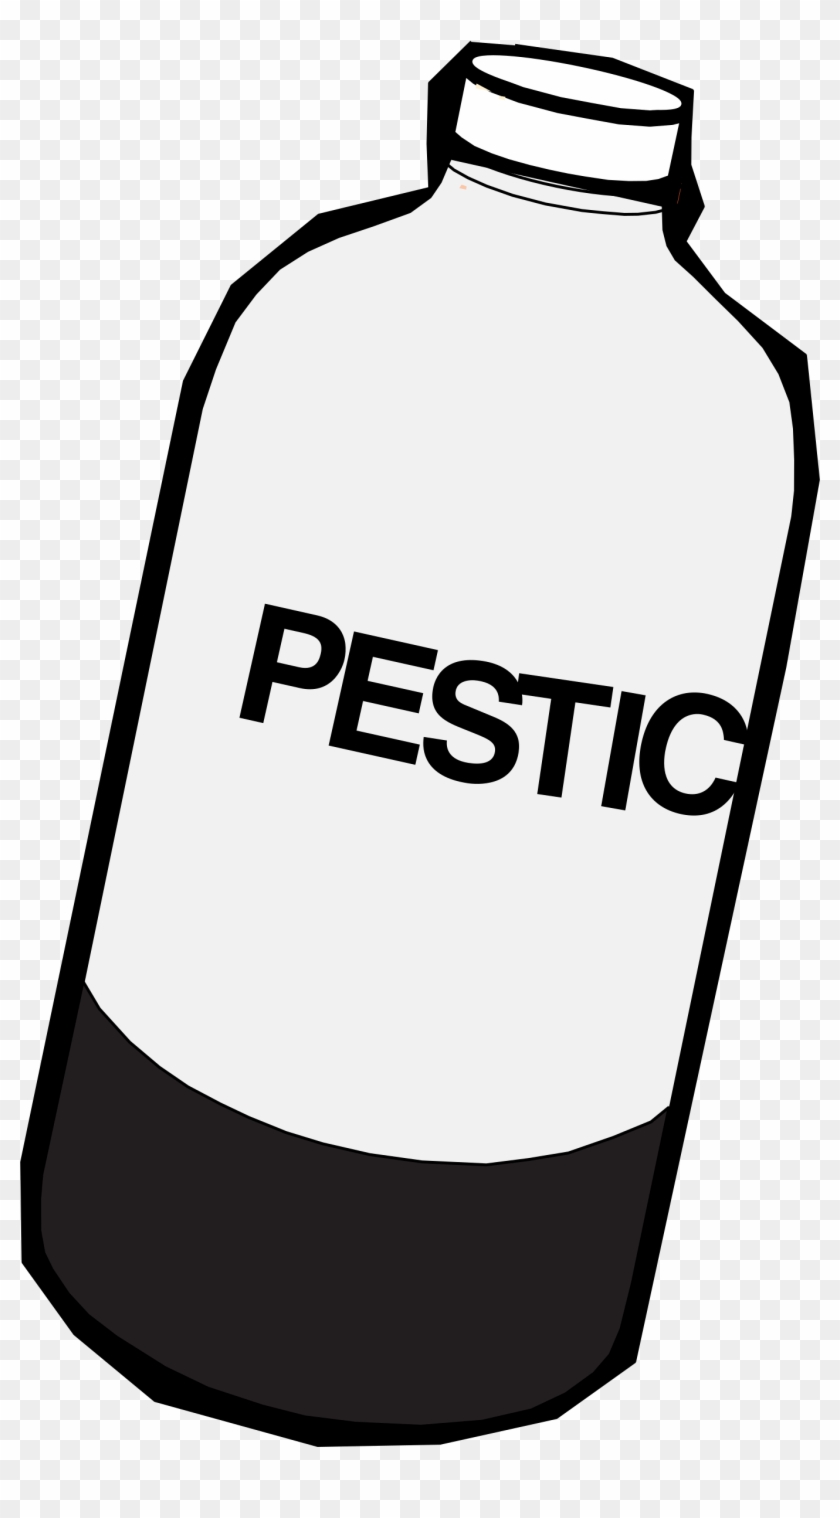 Pesticide Bottle - Pesticide Bottle Clipart #378825